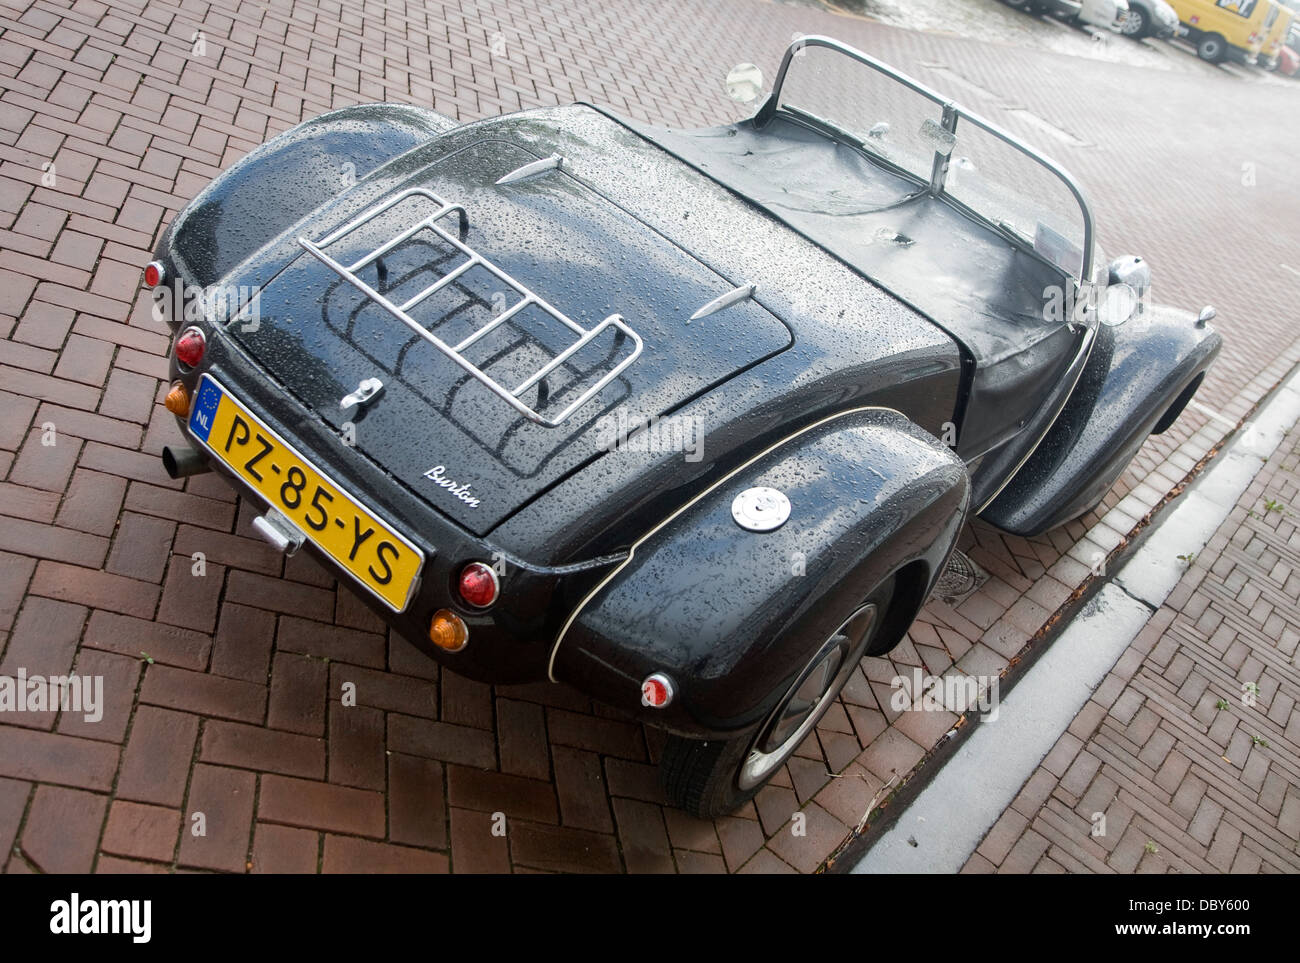 Burton kit car parked on street Netherlands Stock Photo